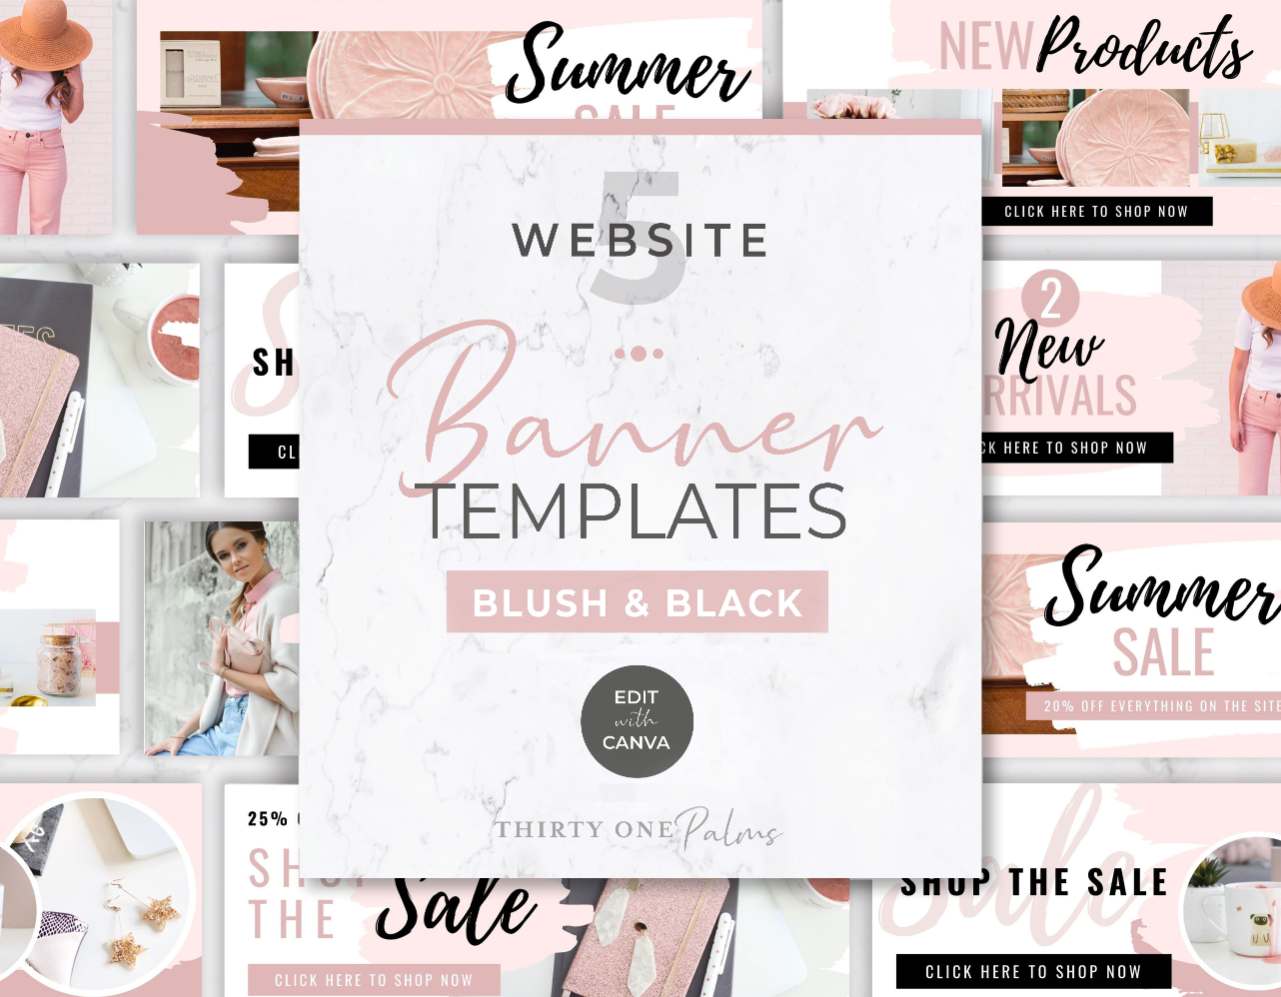 Website Banner Templates for Canva - Blush & Black